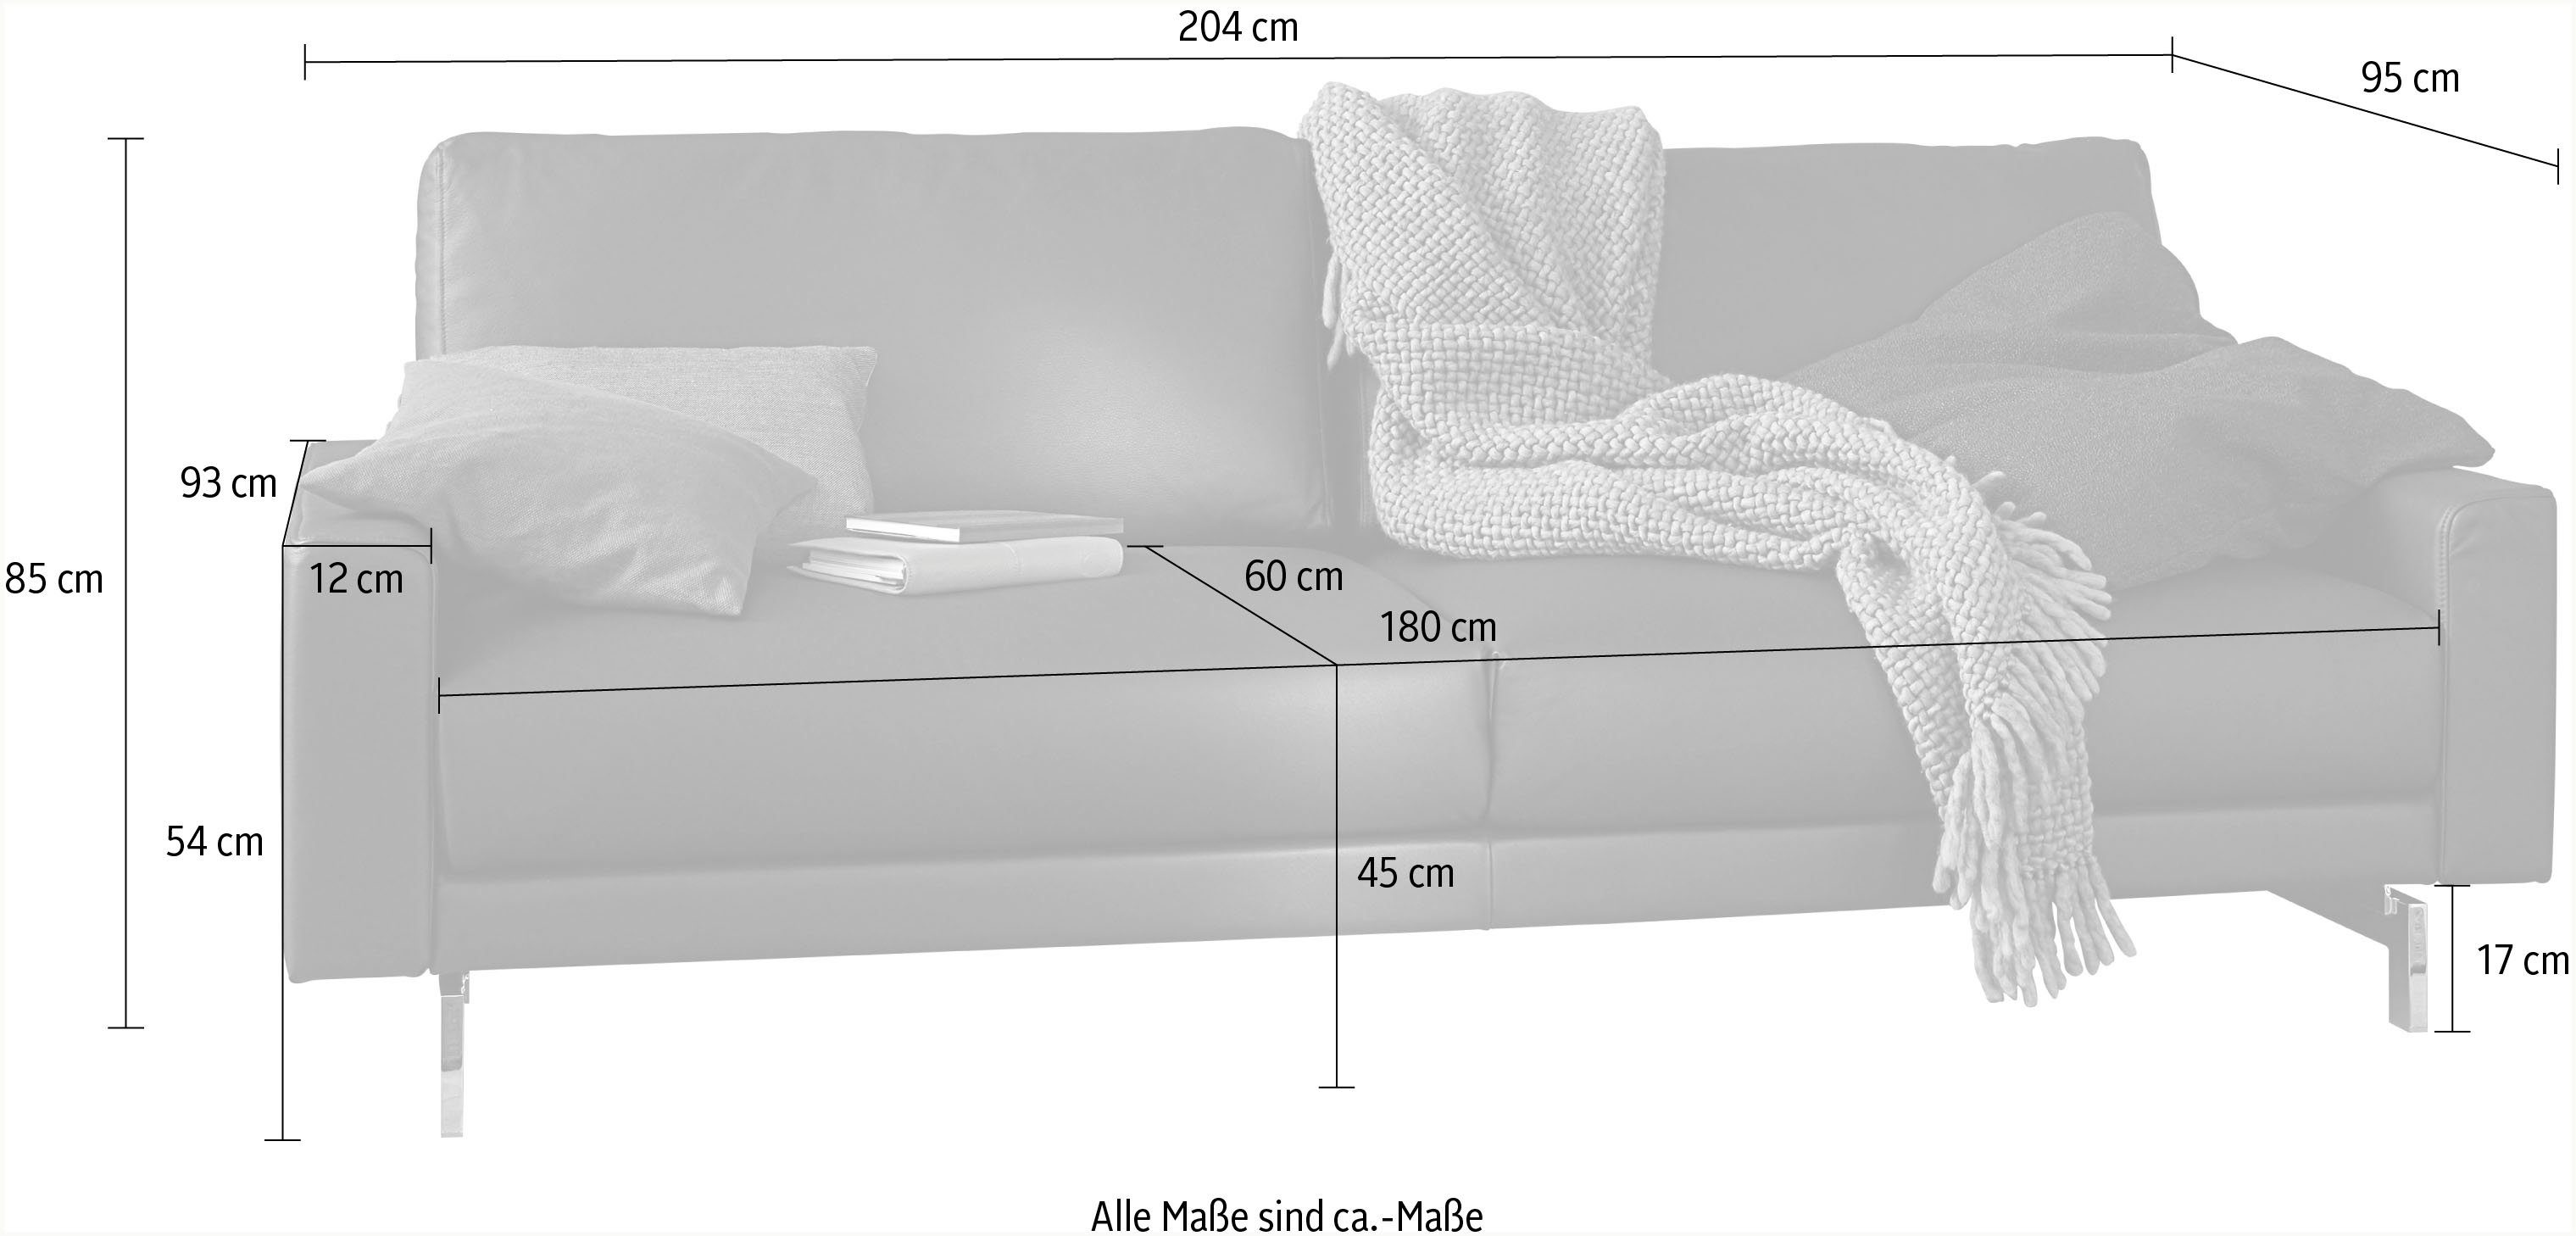 3-Sitzer niedrig, sofa hs.450, glänzend, cm hülsta 204 Armlehne chromfarben Fuß Breite